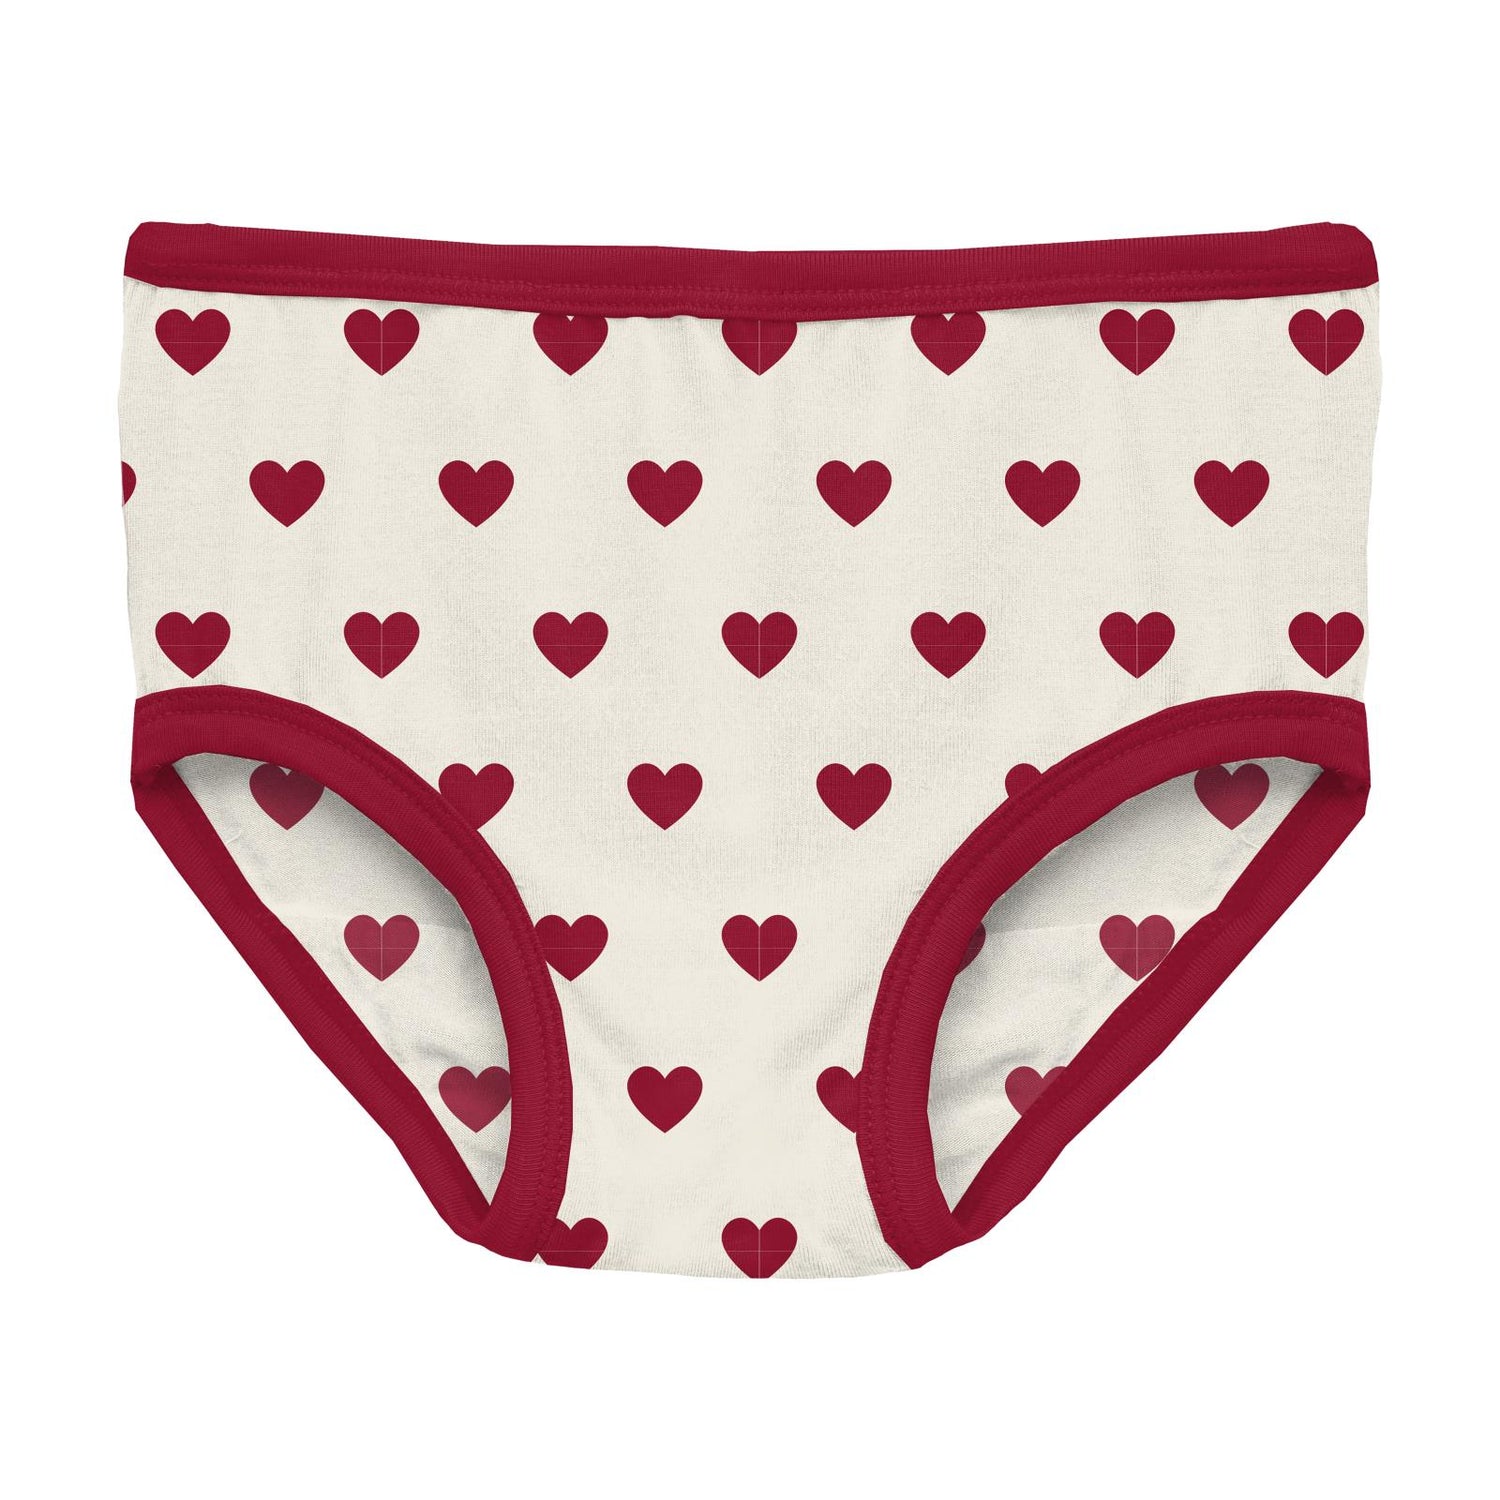 Kickee Pants} Girls' Bikini Underwear :: Blush Strawberry Farm – Ellington  & French